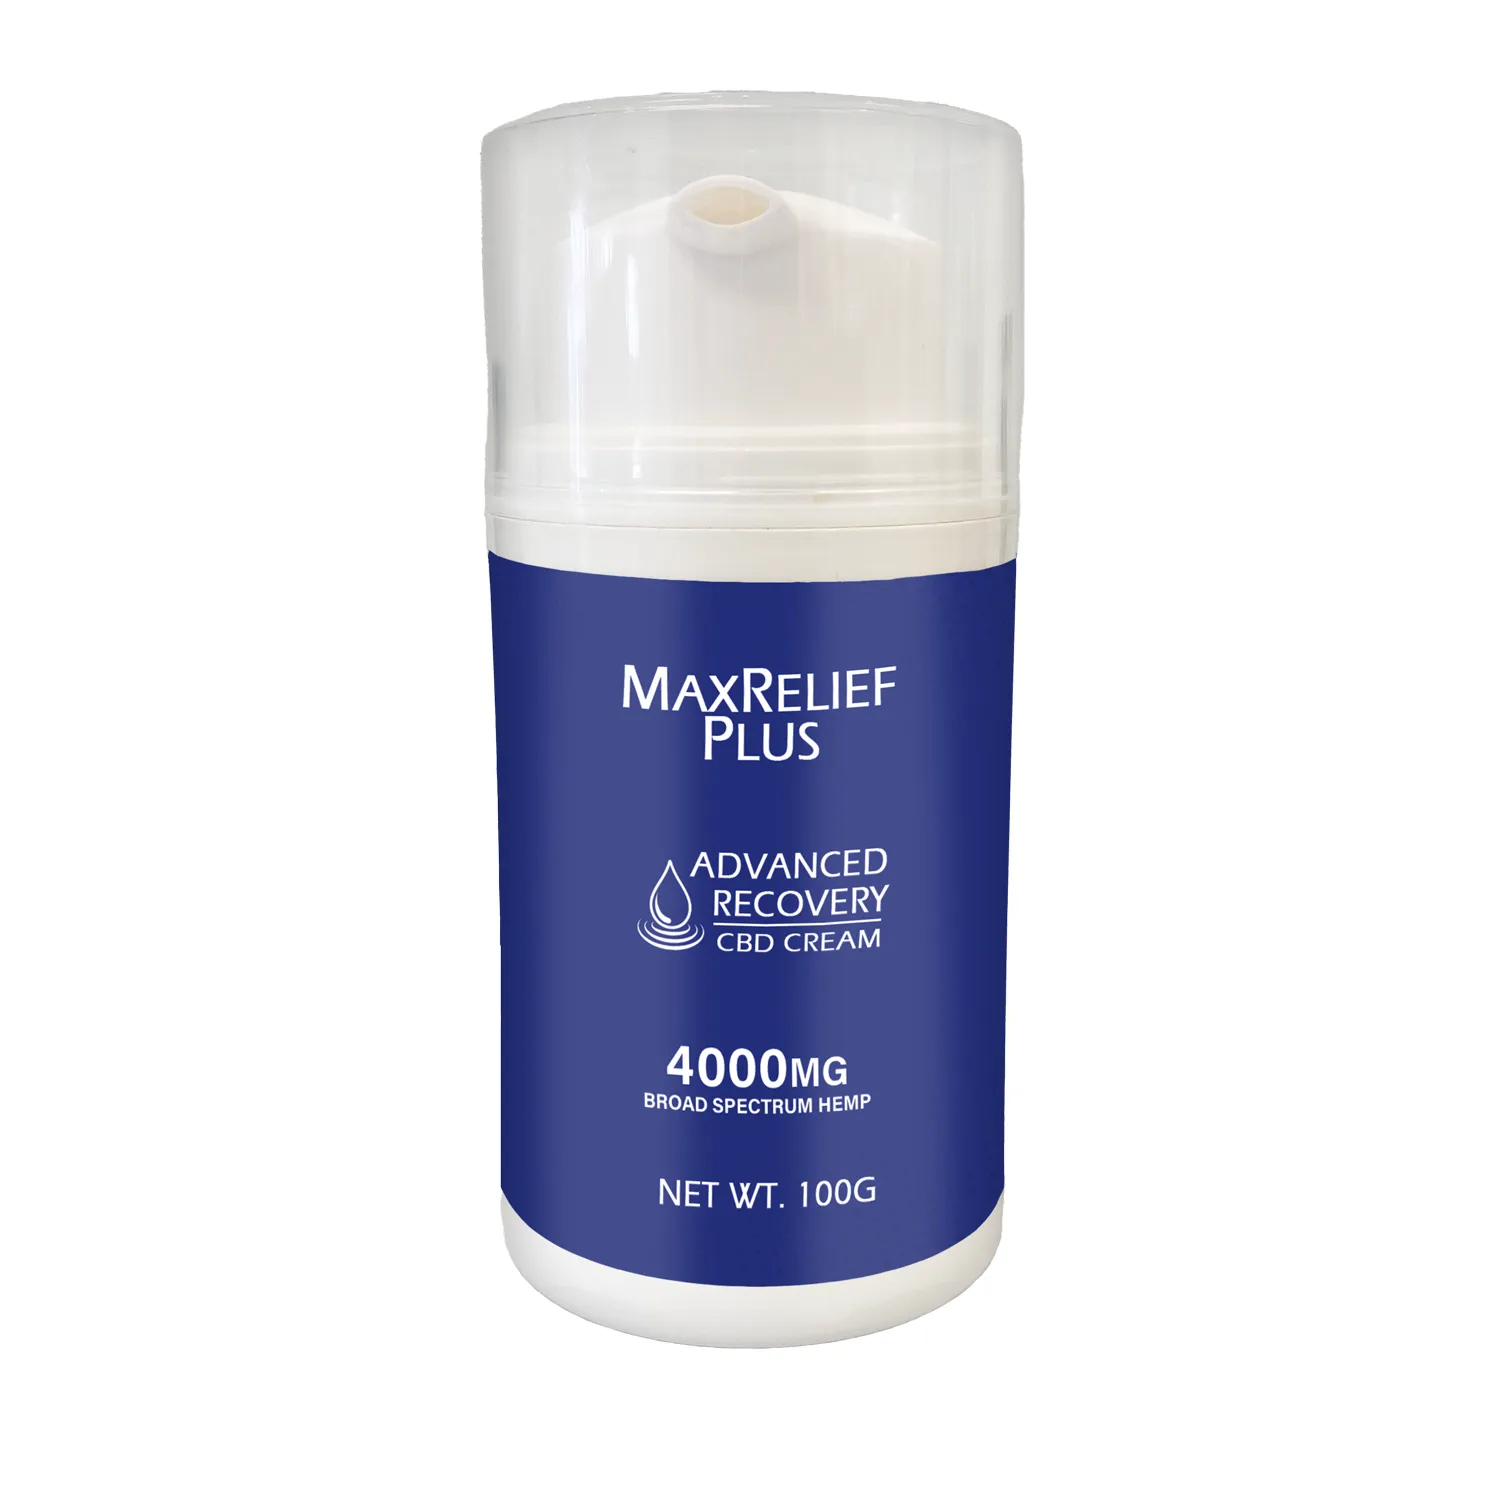 A pump bottle of MaxRelief Plus CBD Cream